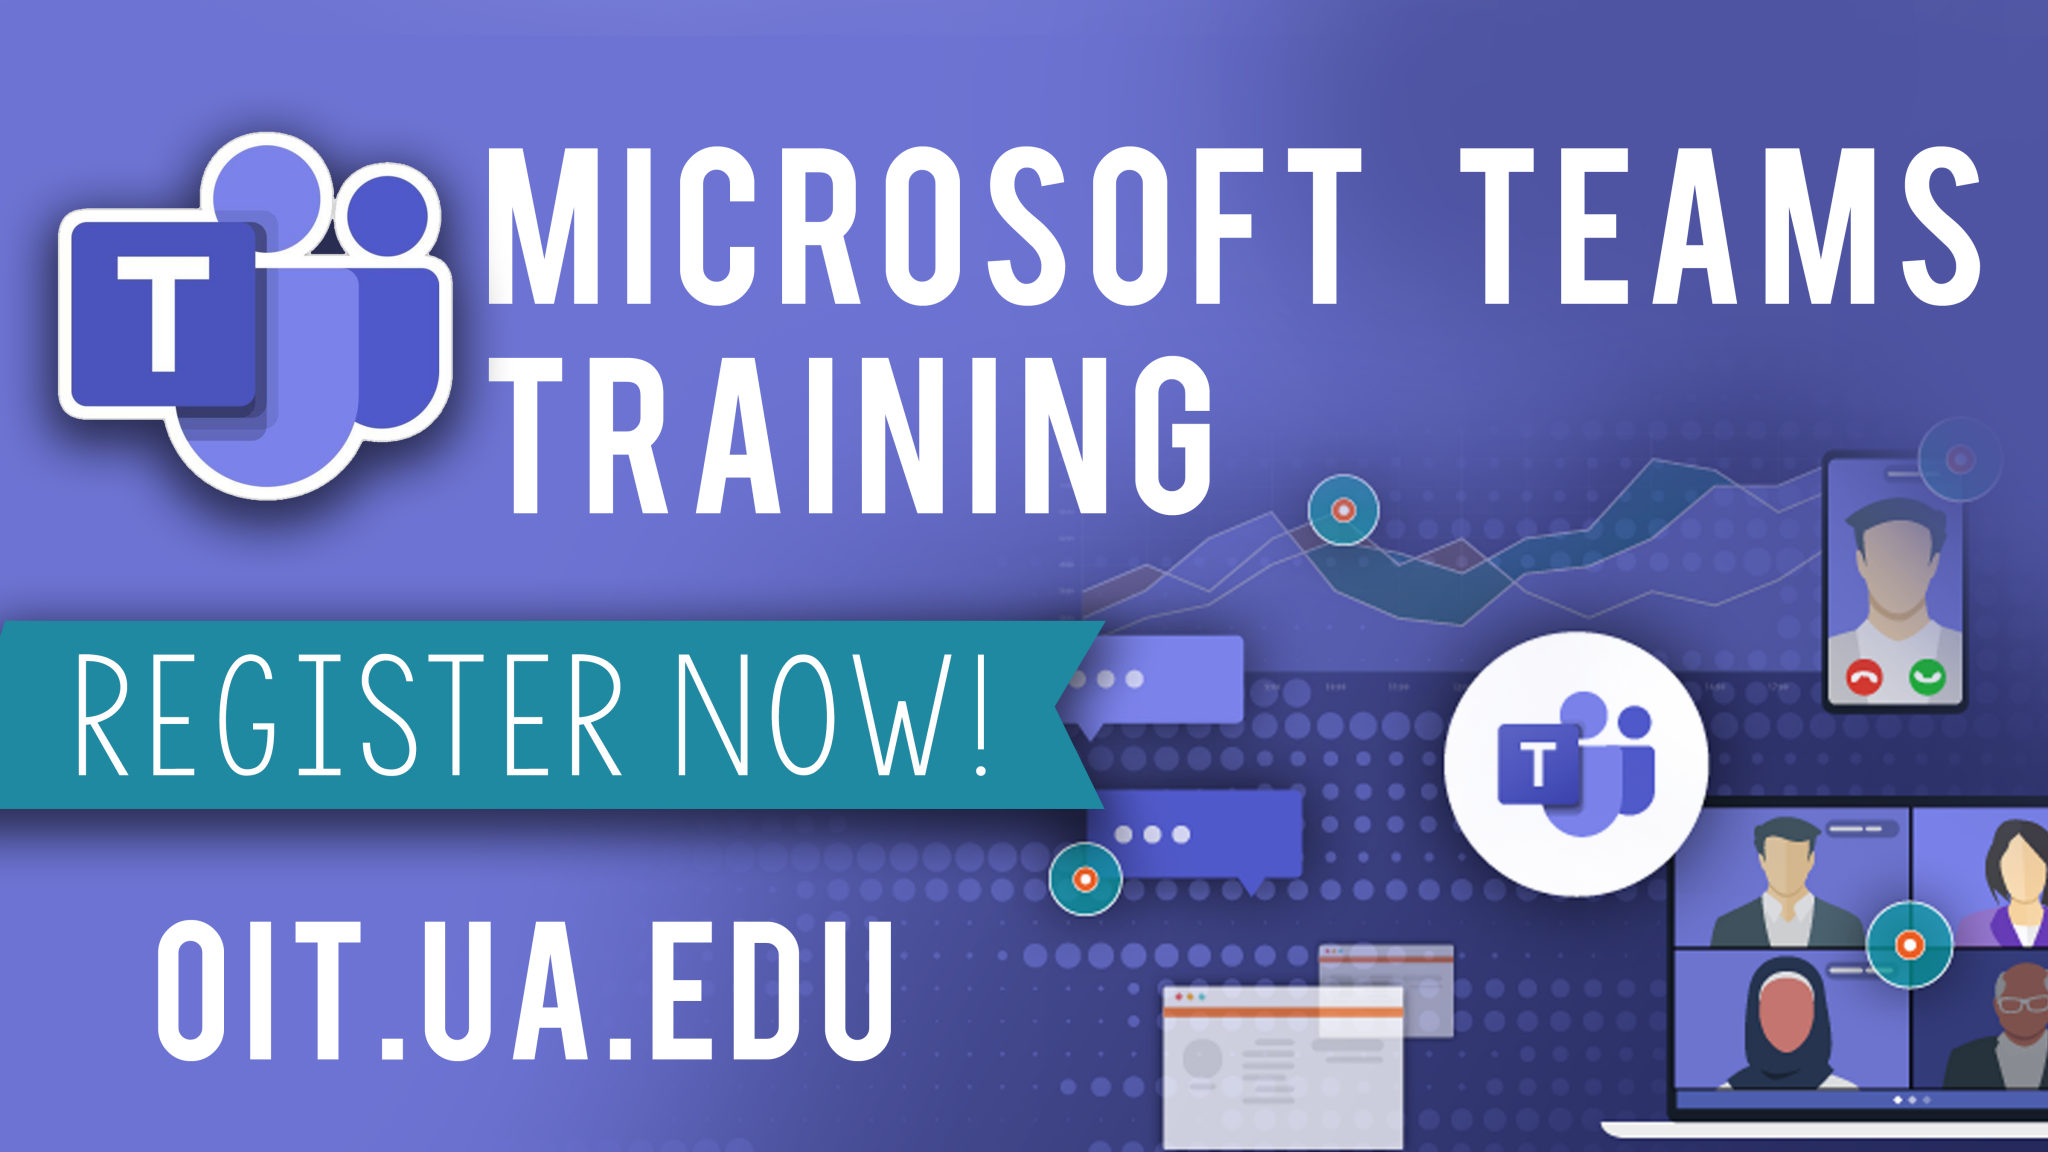 Microsoft Teams Virtual Workshops oit ua edu The University of Alabama